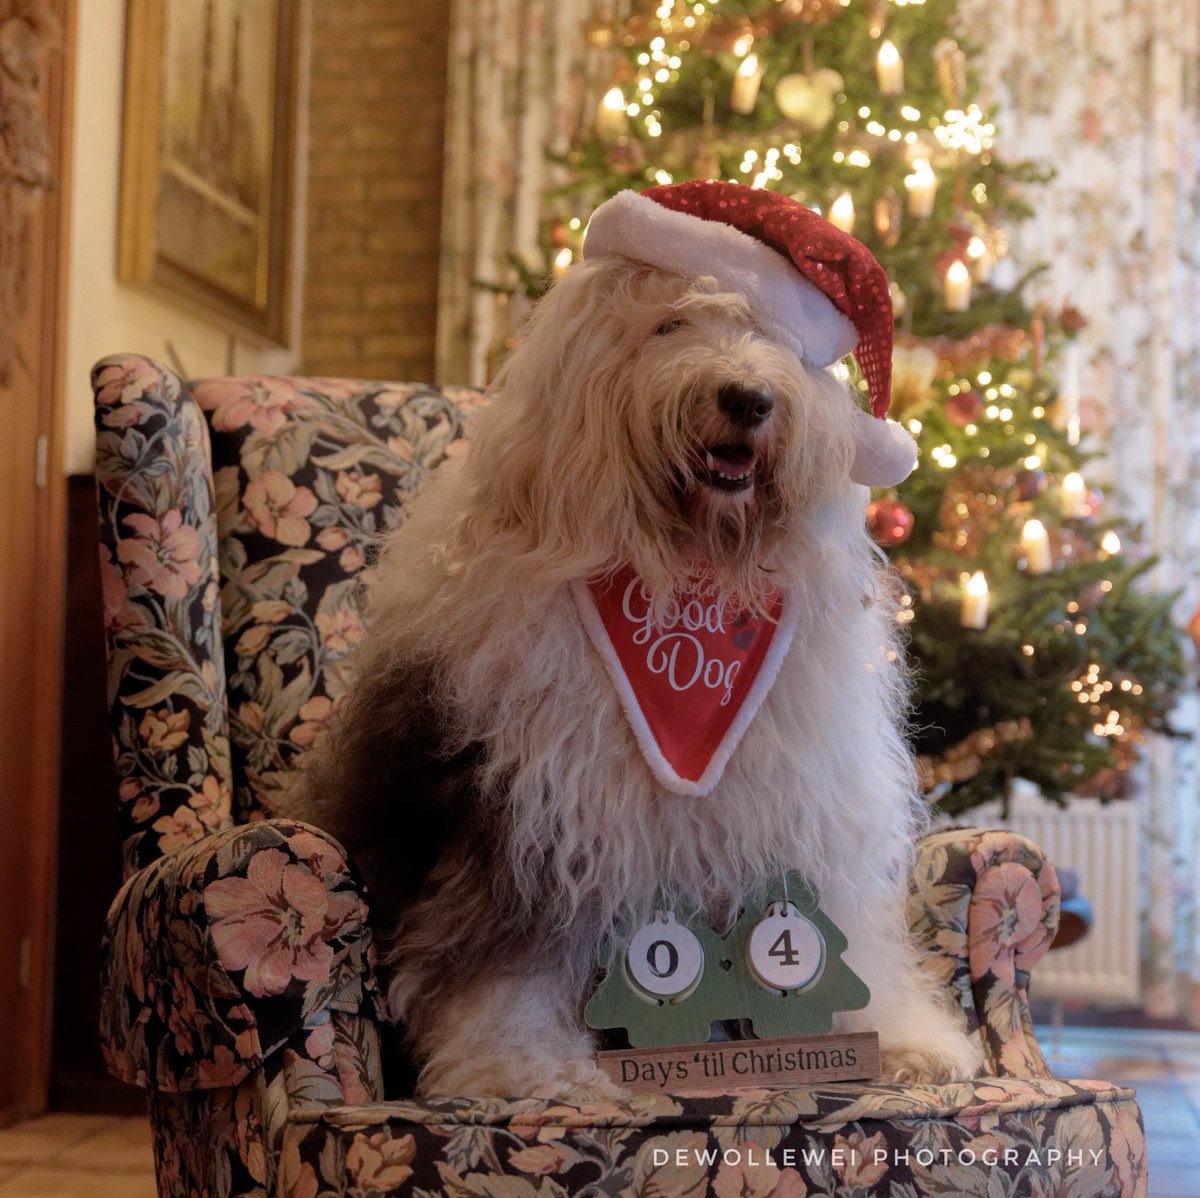 Four days till Christmas.
#oldenglishsheepdog
#oes
#bobtail 
#4daystillChristmas
#Christmas